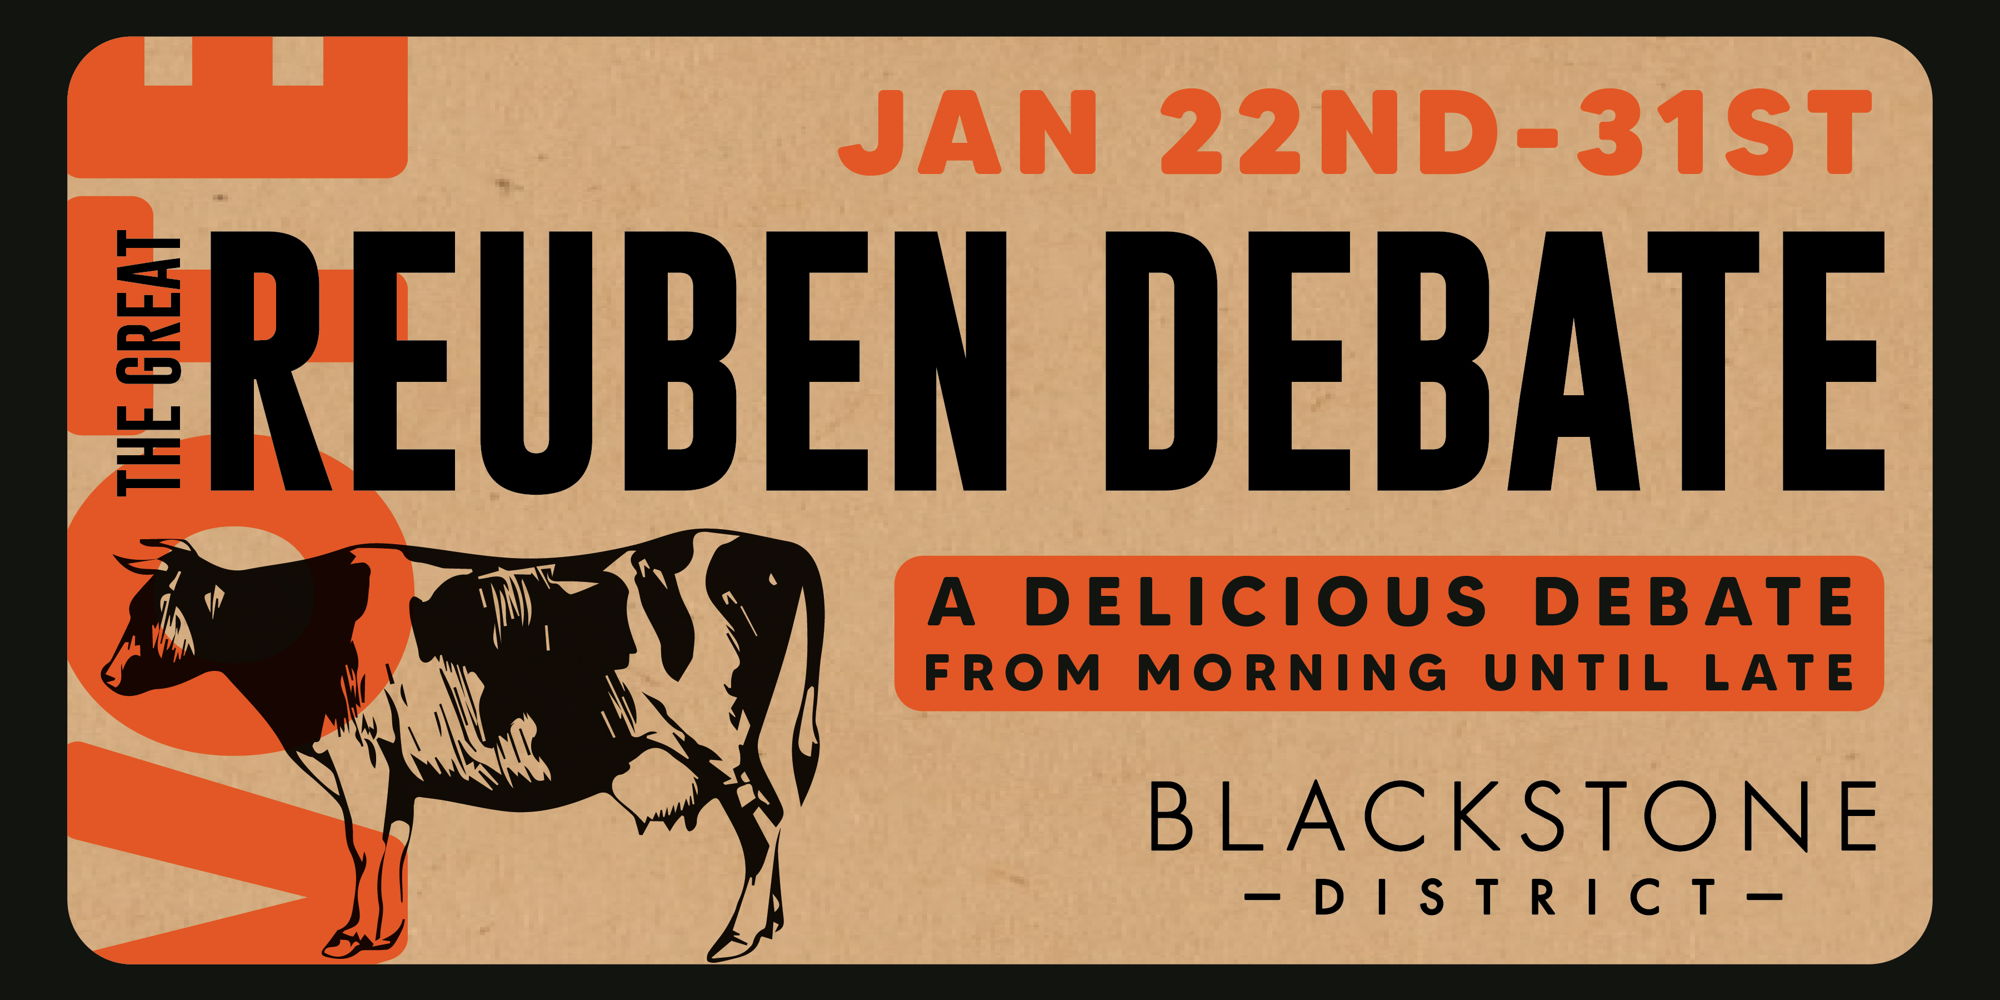 The Great Reuben Debate 2021 promotional image